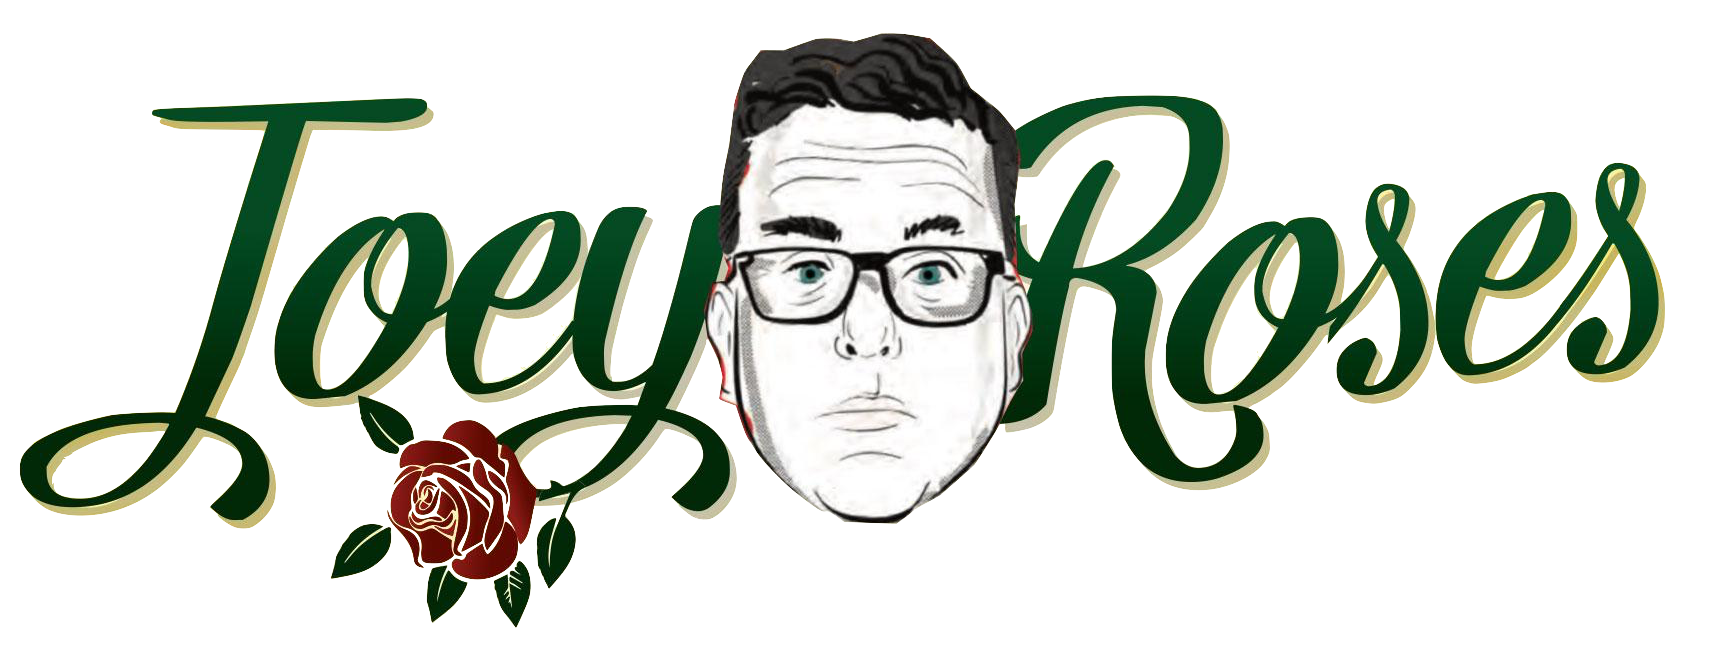 Joey Roses logo